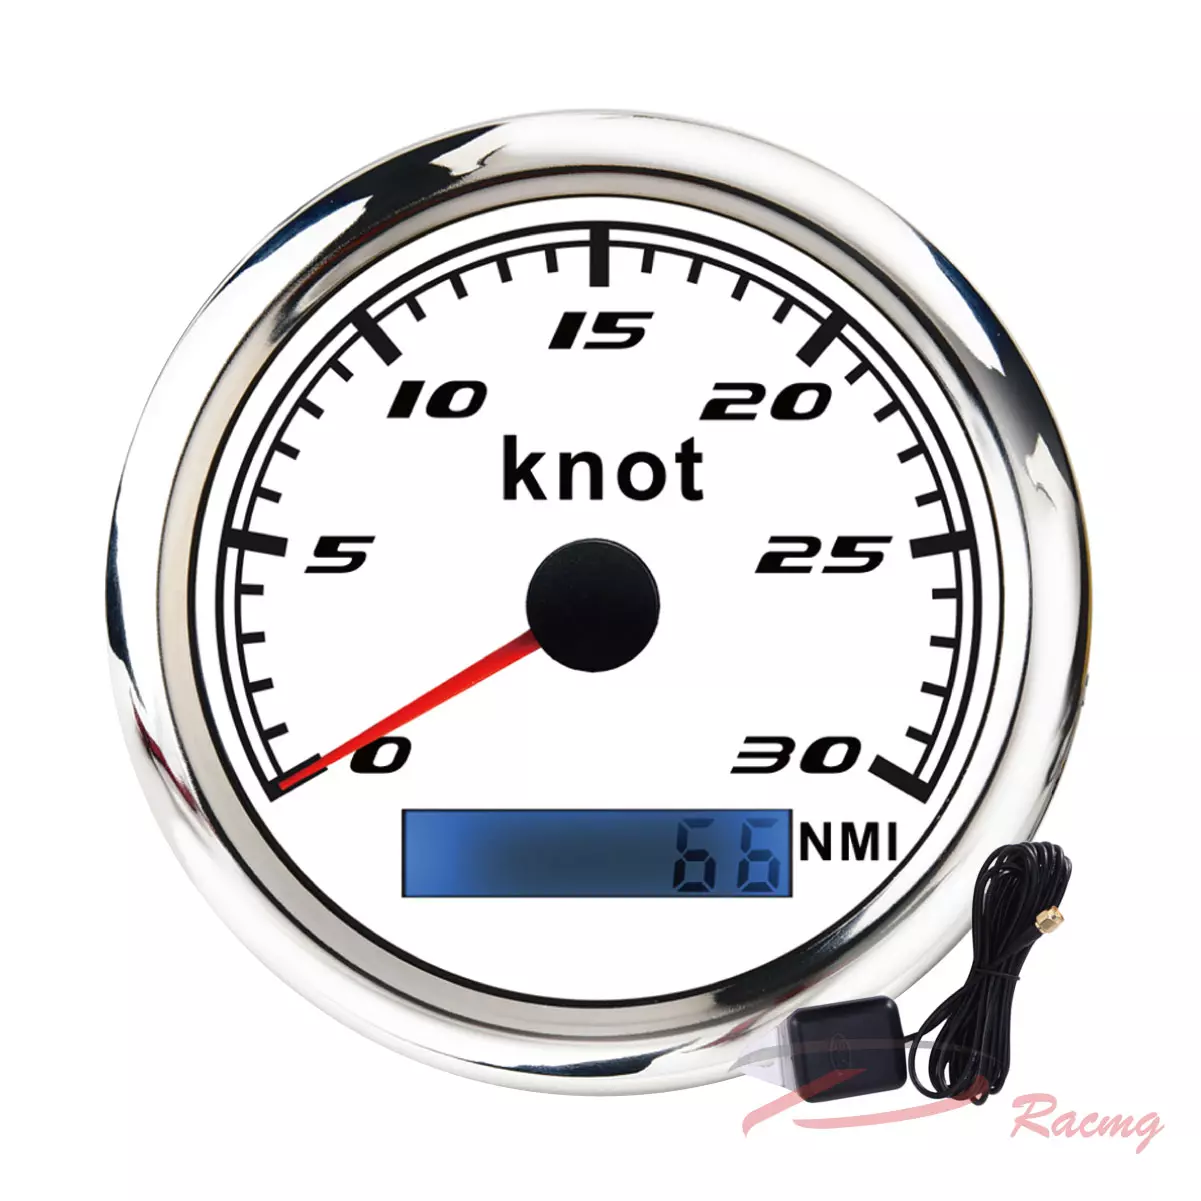 Dracing, Depo racing, AutoMeter, gps speedometer, electric speedometer, digital speedometer, mechanical speedometer, 3-3/8" speedometer, 5" speedometer, MPH speedometer, KM/H speedometer, 0-50 MPH speedometer, 0-100 MPH speedometer, 0-120 MPH speedometer, 0-140 MPH speedometer, 0-160 MPH speedometer, 180 MPH speedometer, 0-200 MPH speedometer, 0-190 KM/H speedometer, 0-225 KM/H speedometer, 260 KM/H speedometer, air-core speedometer, digital stepper motor speedometer, mechanical speedometer, analog speedometer, easy calibration speedometer, fast speedometer, accurate speedometer, durable speedometer, best speedometer, ultra-lite speedometer, pro-comp speedometer, cobalt speedometer, carbon fiber speedometer, racing speedometer, car speedometer, truck speedometer, suv speedometer, monster speedometers, motorcycle speedometers, GPS Speedometers, AutoMeter GPS Speedo, AutoMeter GPS Speedometer, AutoMeter GPS Speedometers, Marine GPS Speedometers, Motorcycle GPS Speedometers